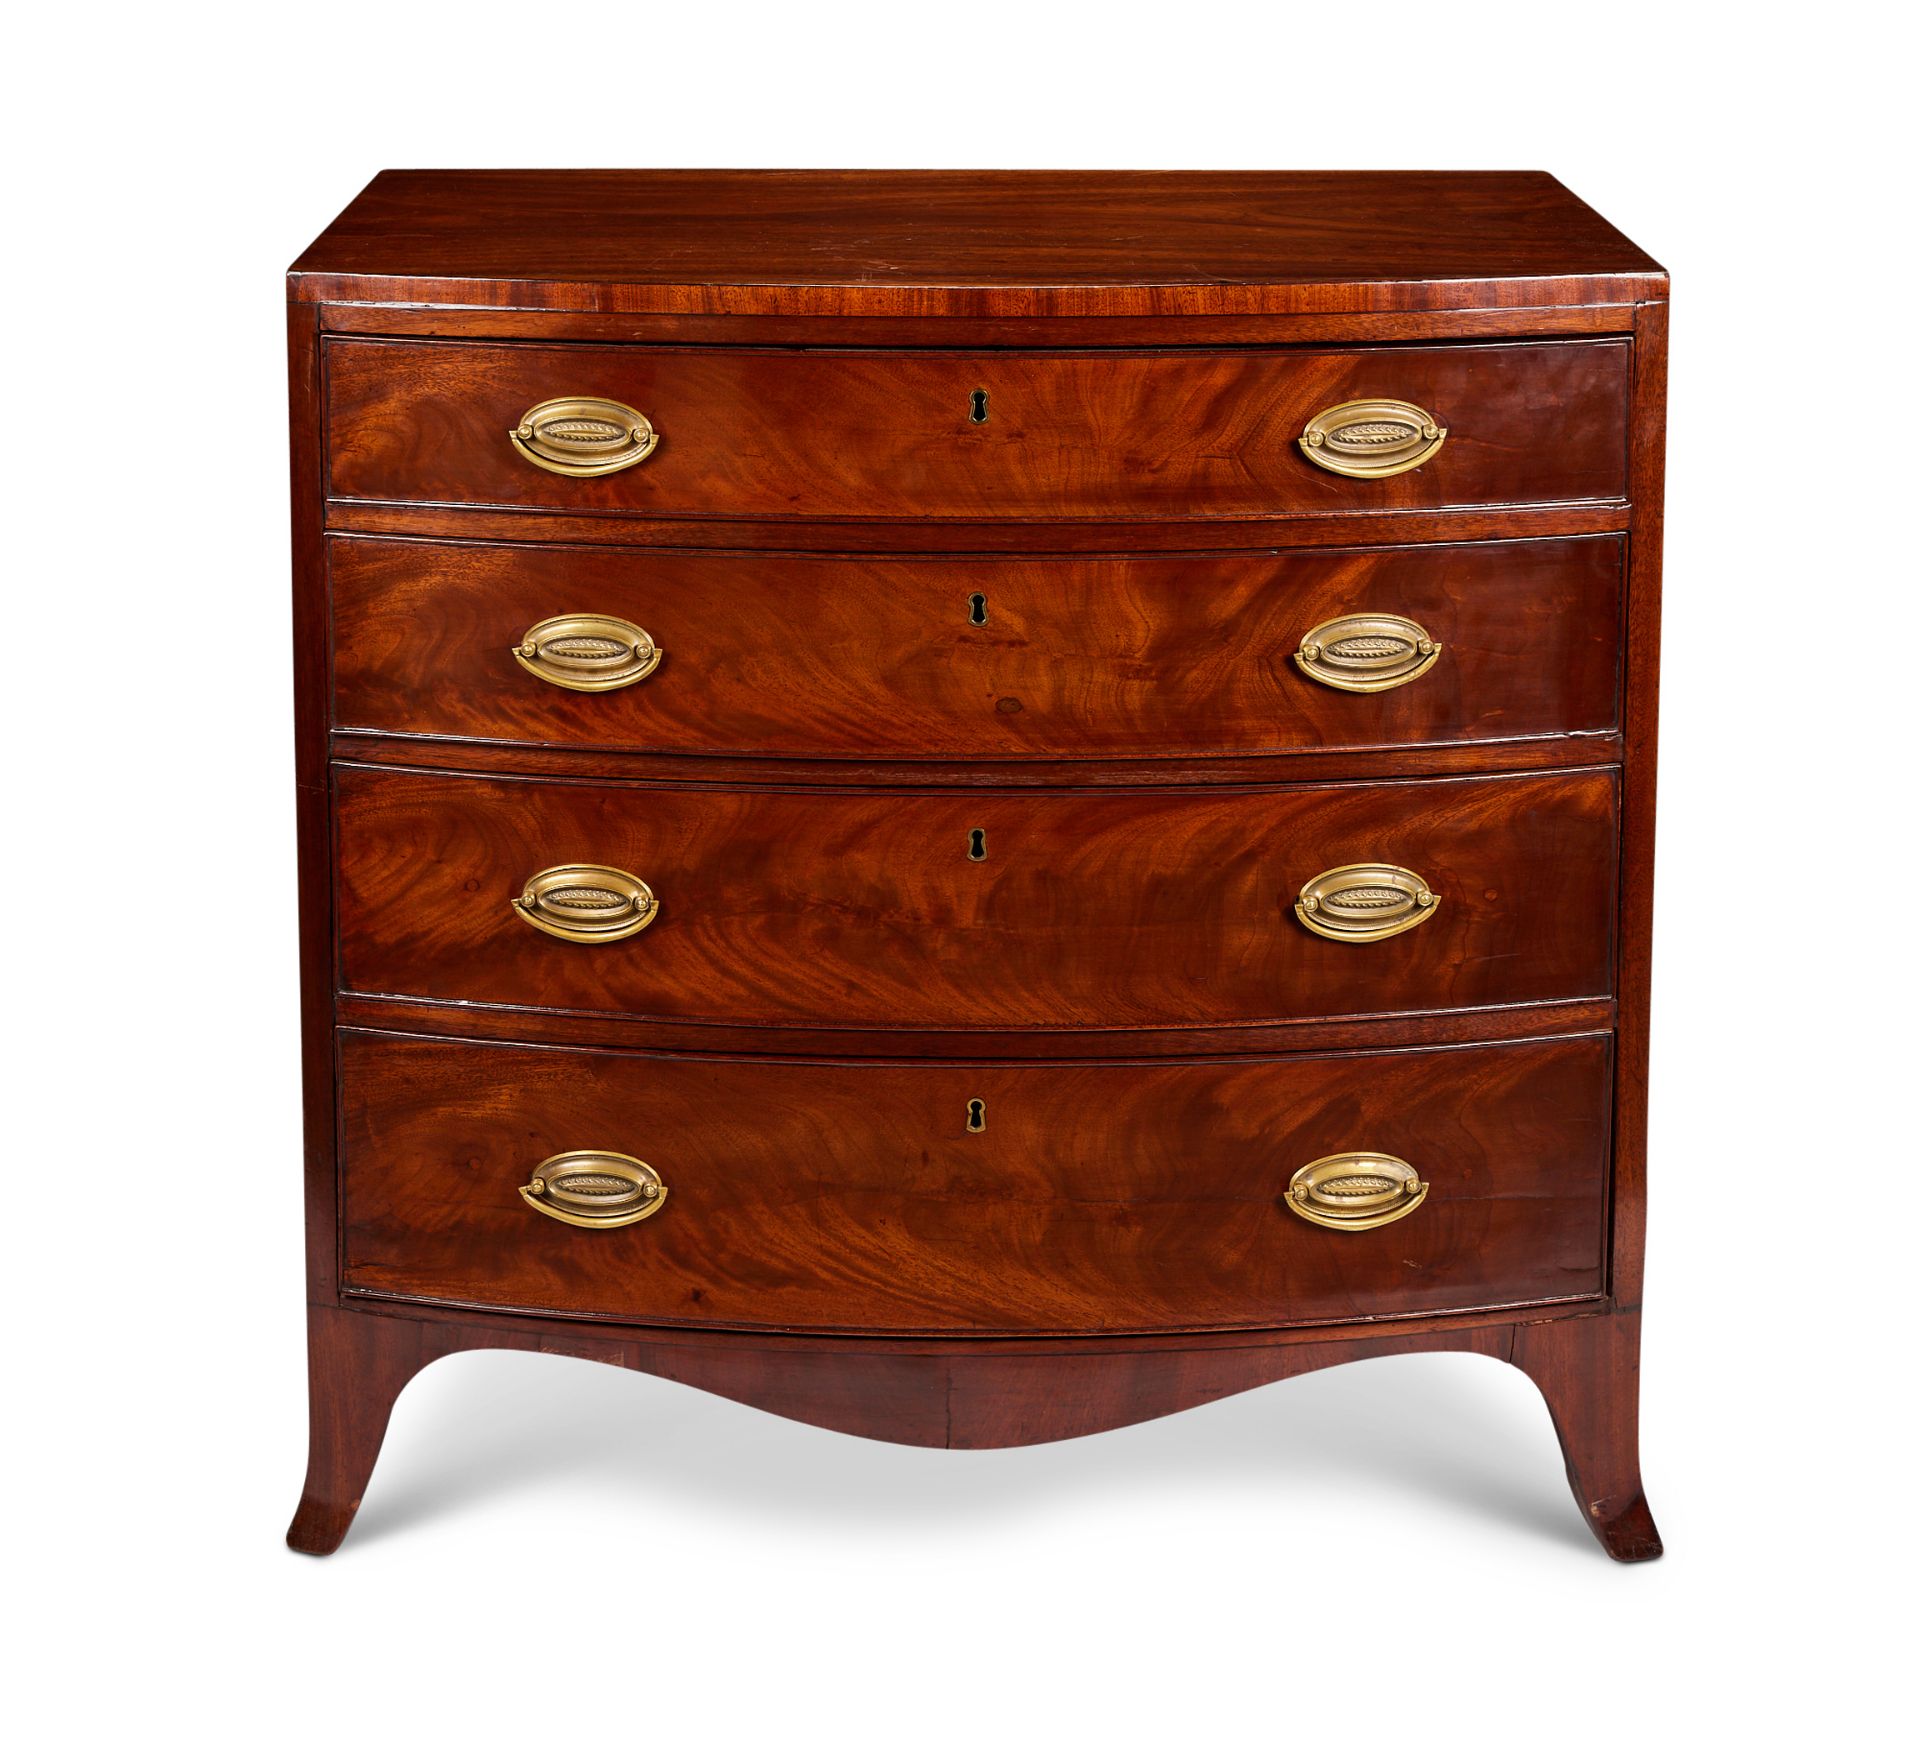 A small Regency mahogany bowfront chest